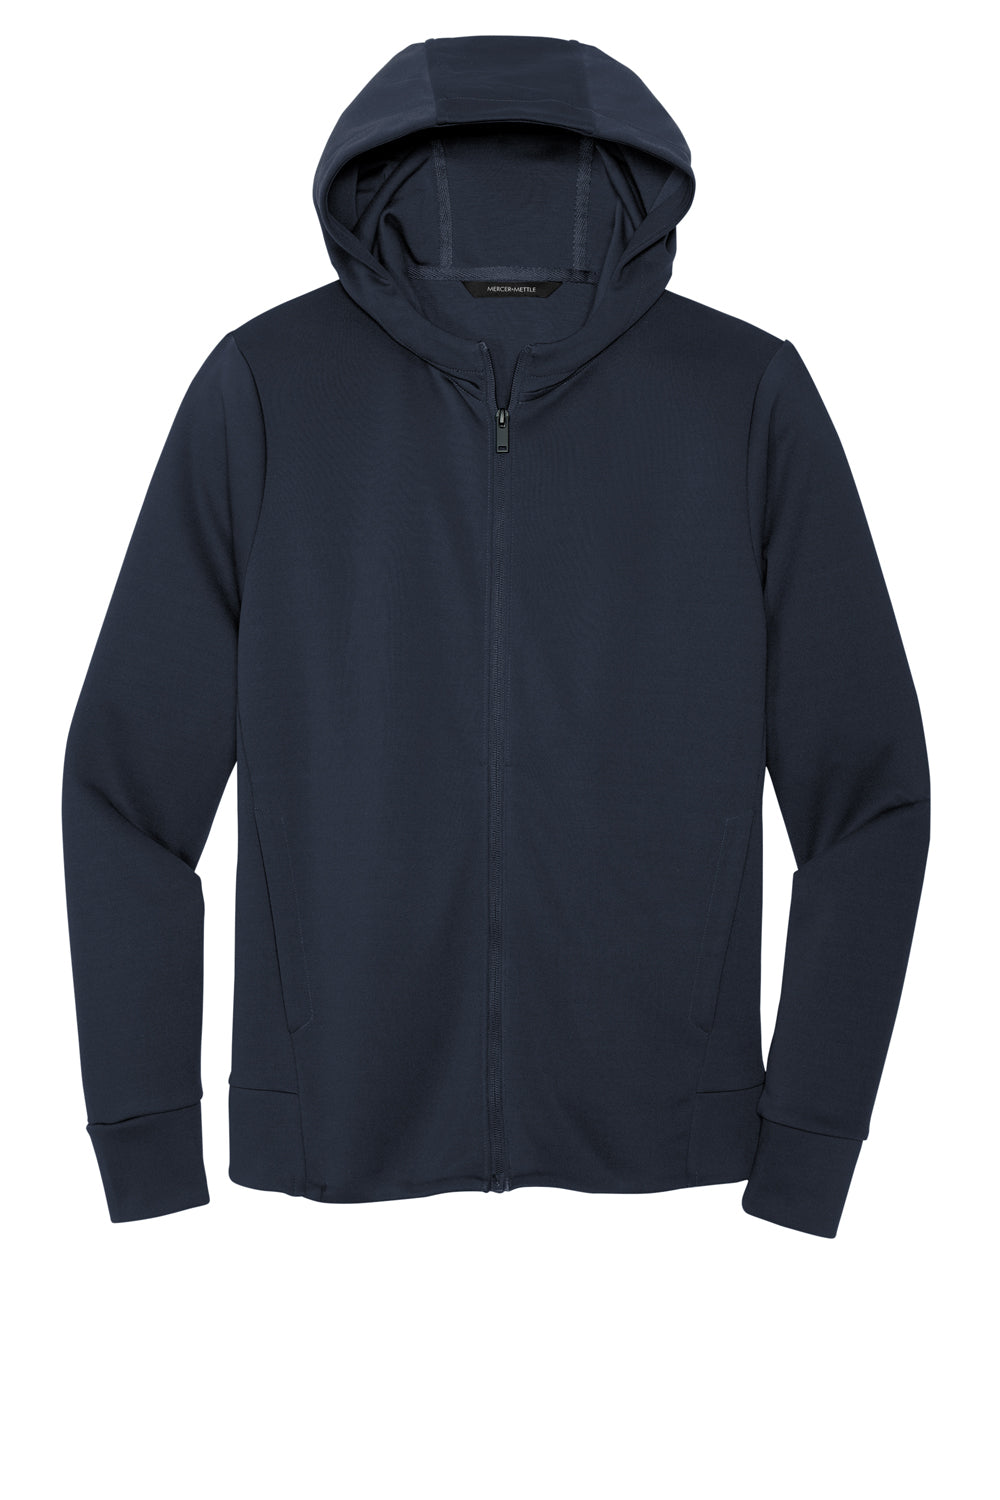 Mercer+Mettle MM3002 Double Knit Full Zip Hooded Sweatshirt Hoodie Night Navy Blue Flat Front